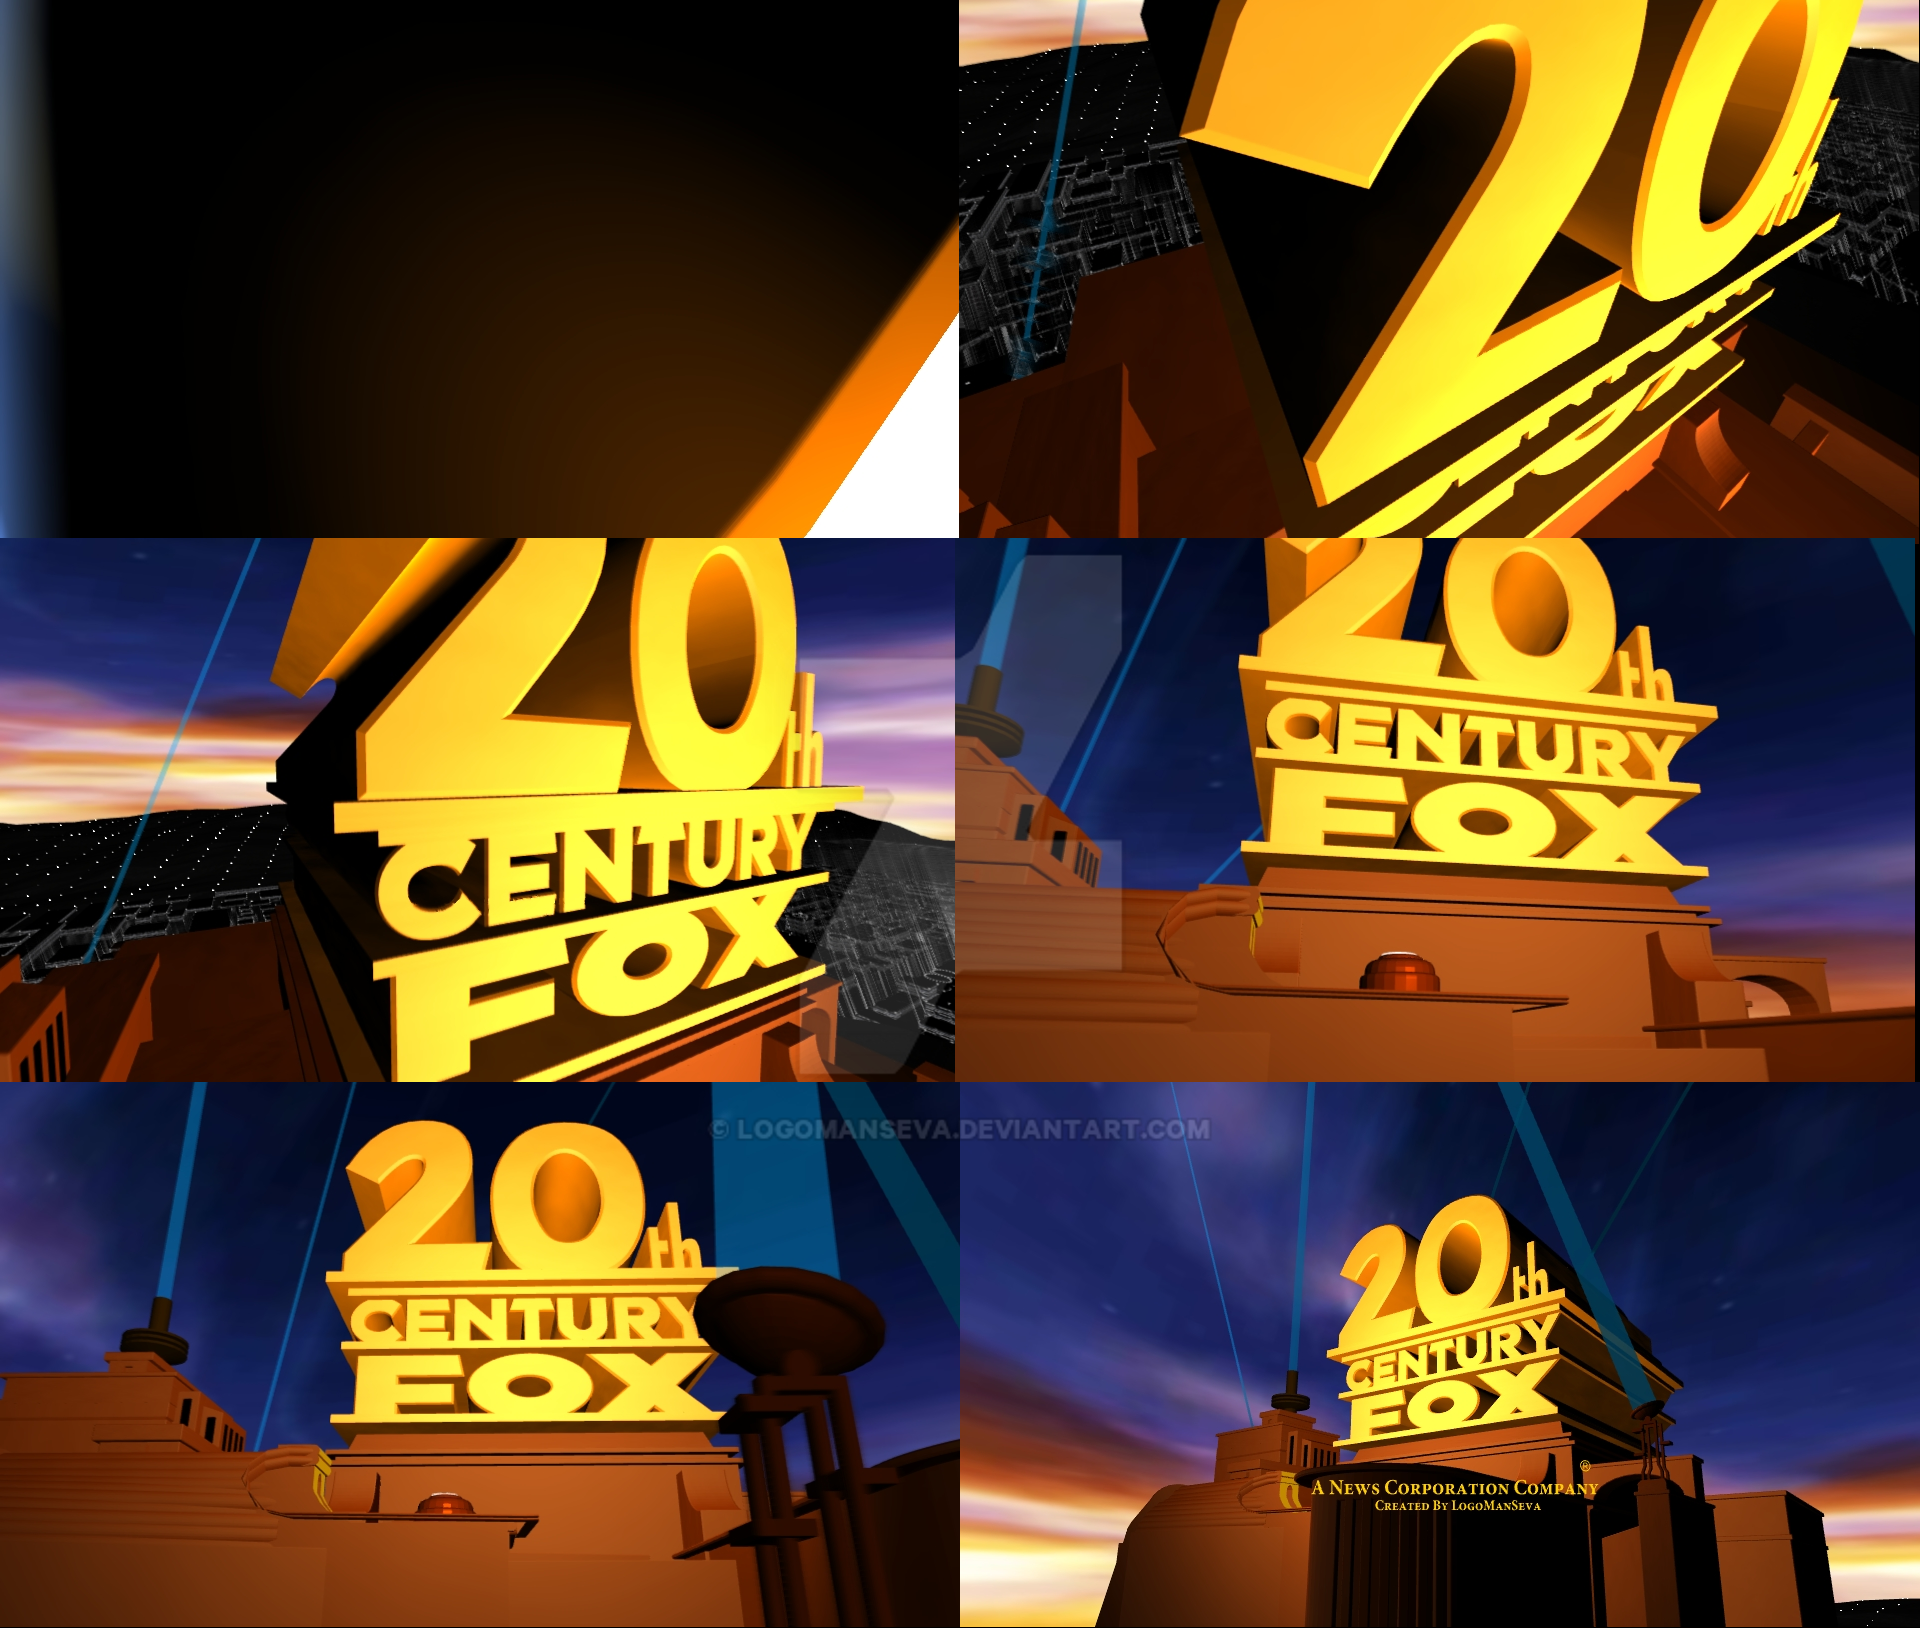 20th Century Fox 1981 Logo Remake (Standard) by TPPercival on DeviantArt